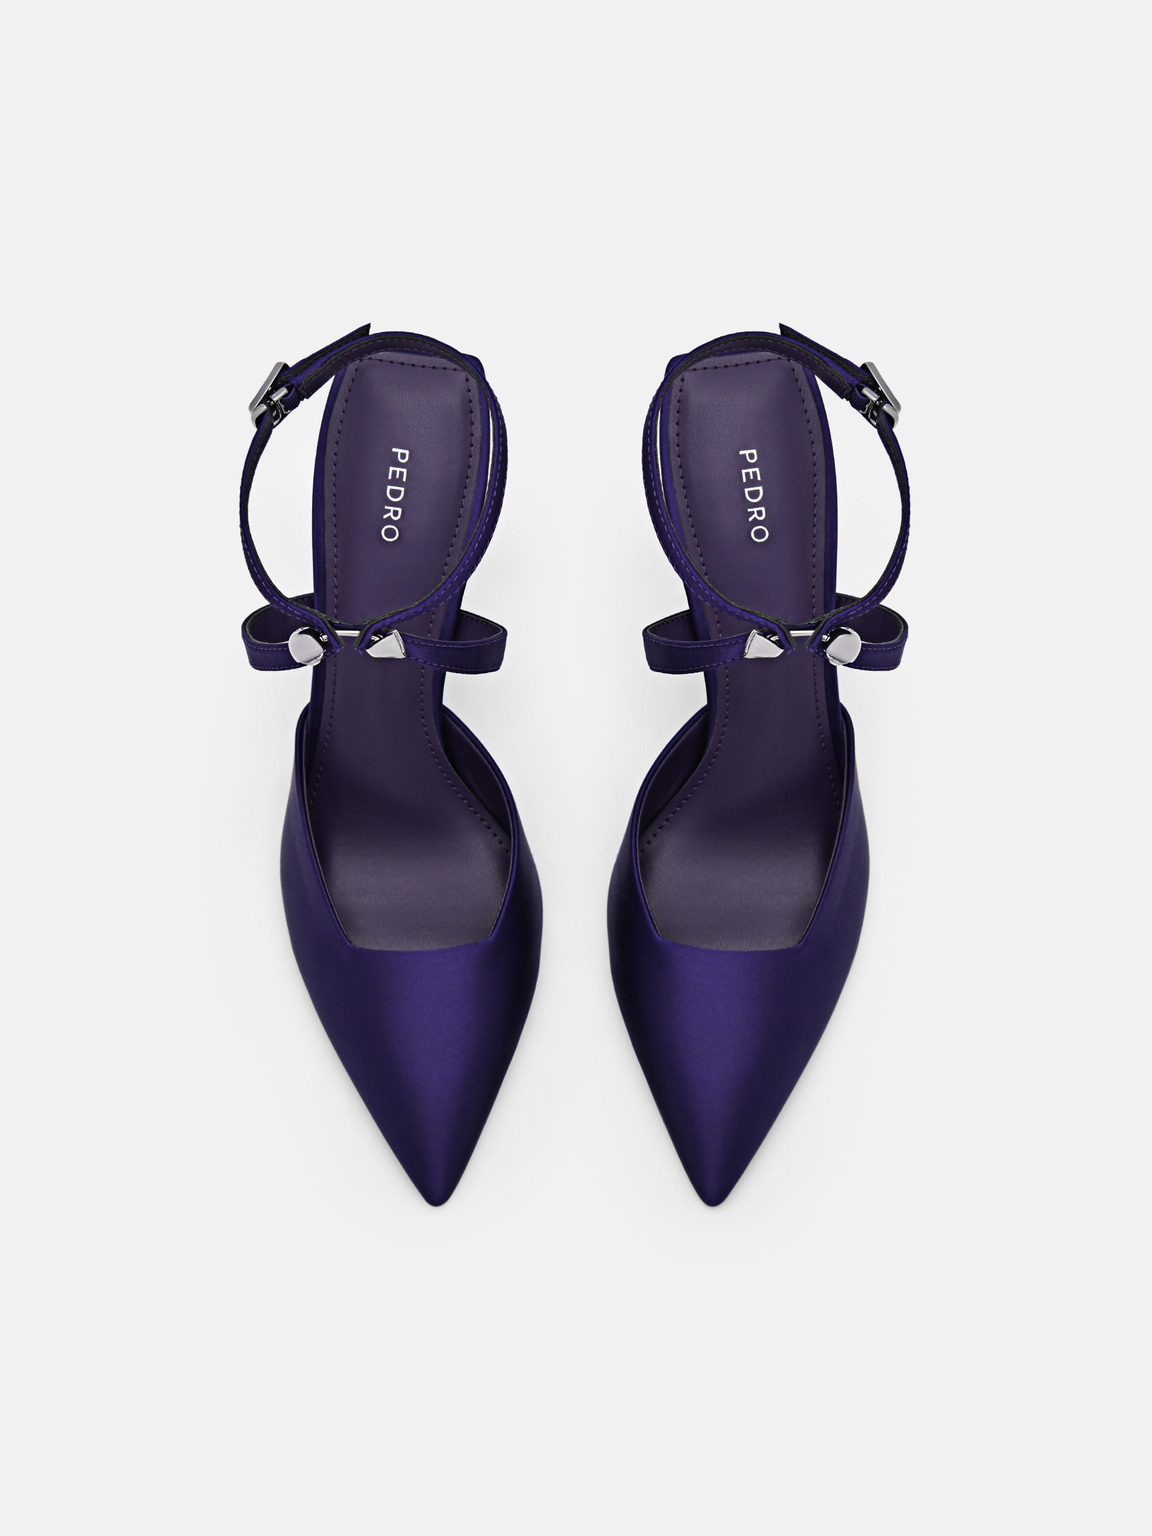 Sofia Leather Pumps, Dark Purple